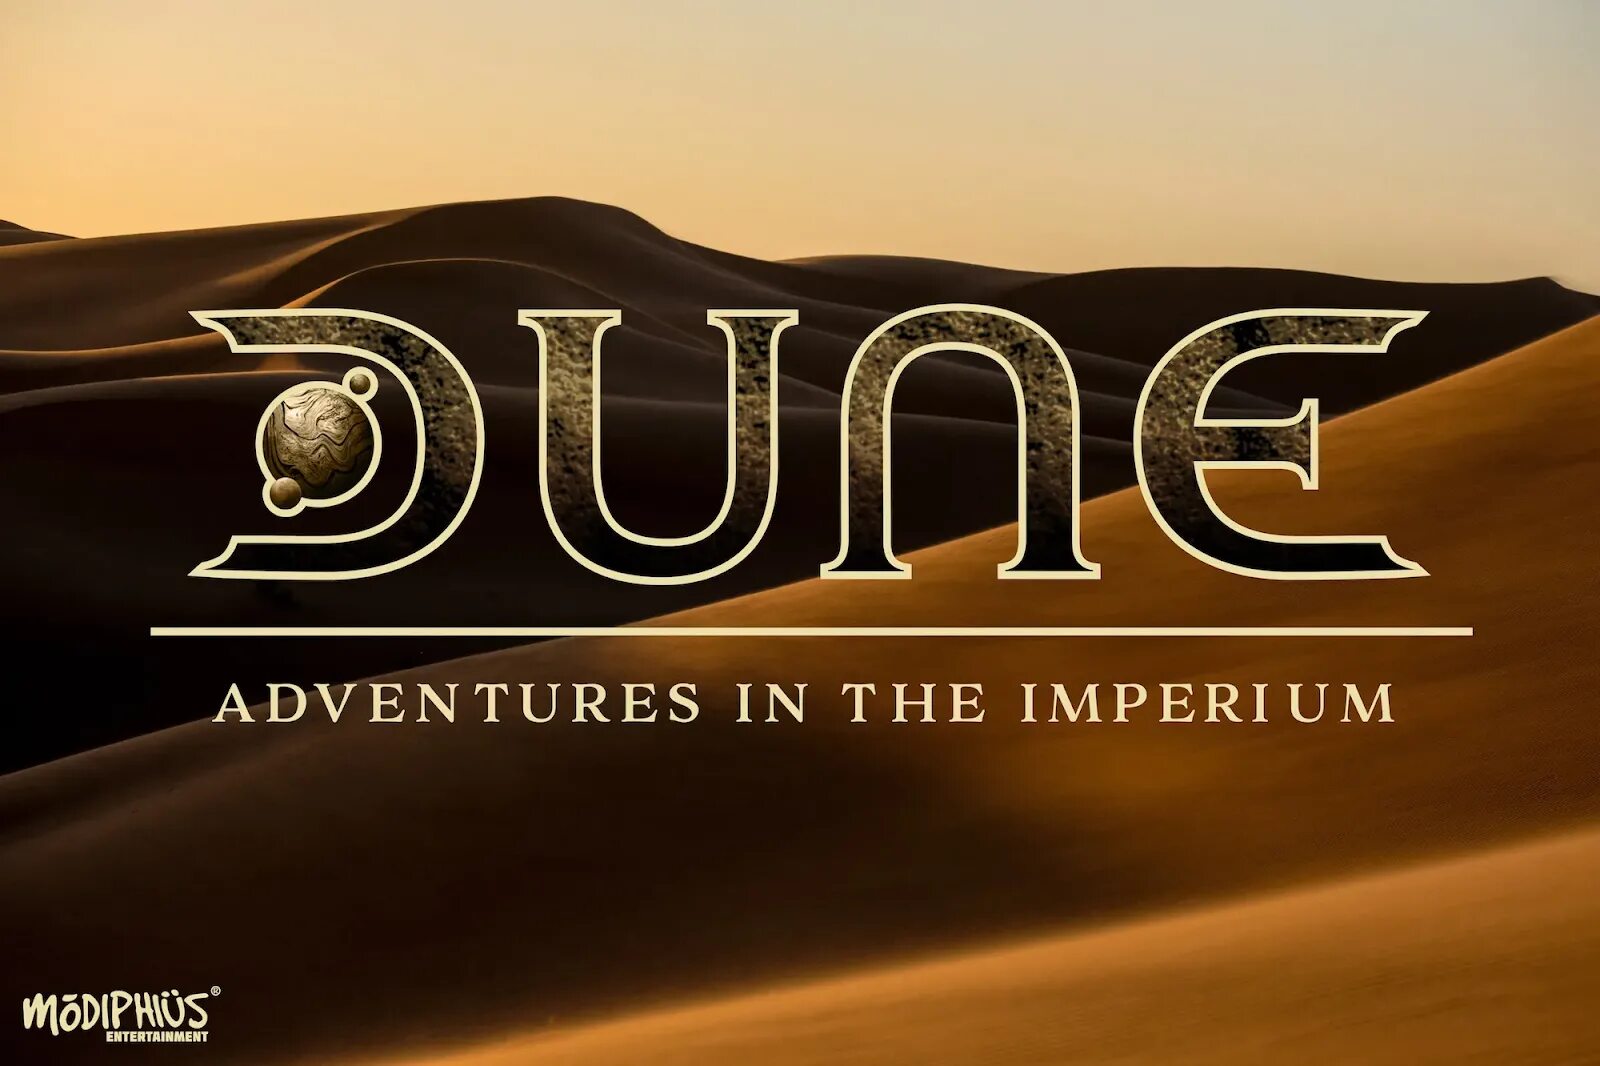 Dune 2021 logo. Dune (игра). Дюна Империум. Dune adventure